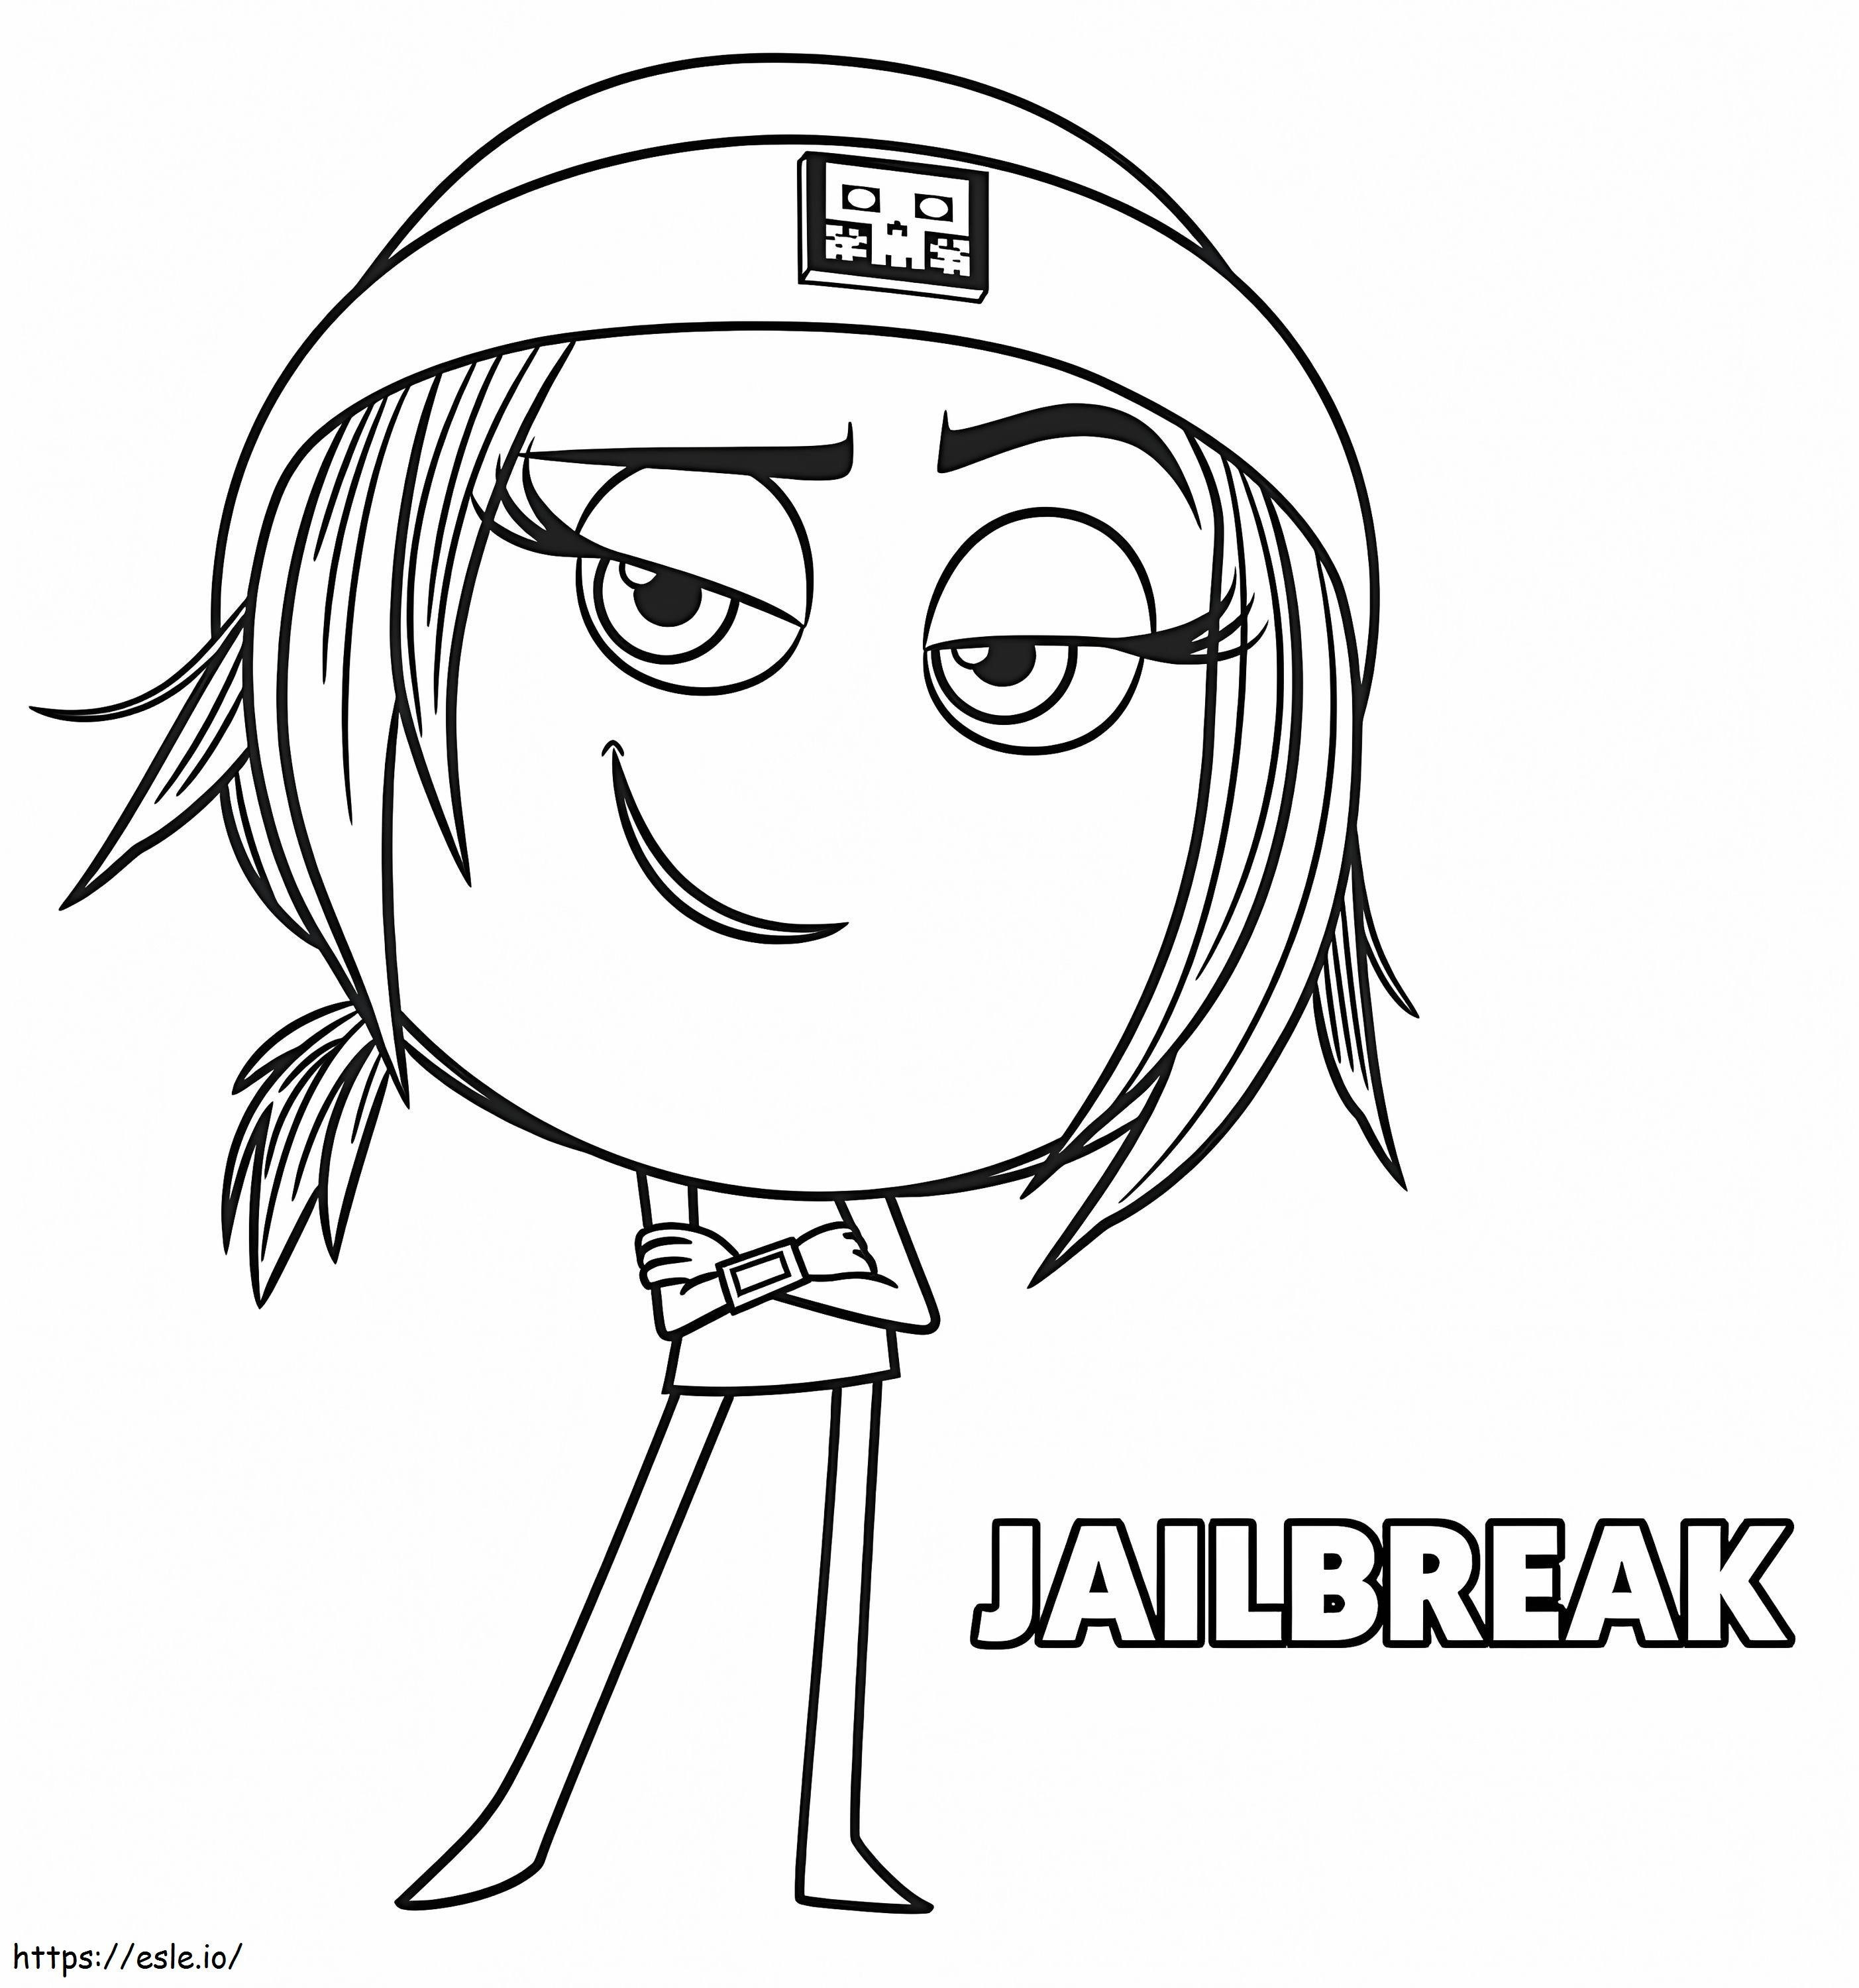 Jailbreak nel film Emoji da colorare